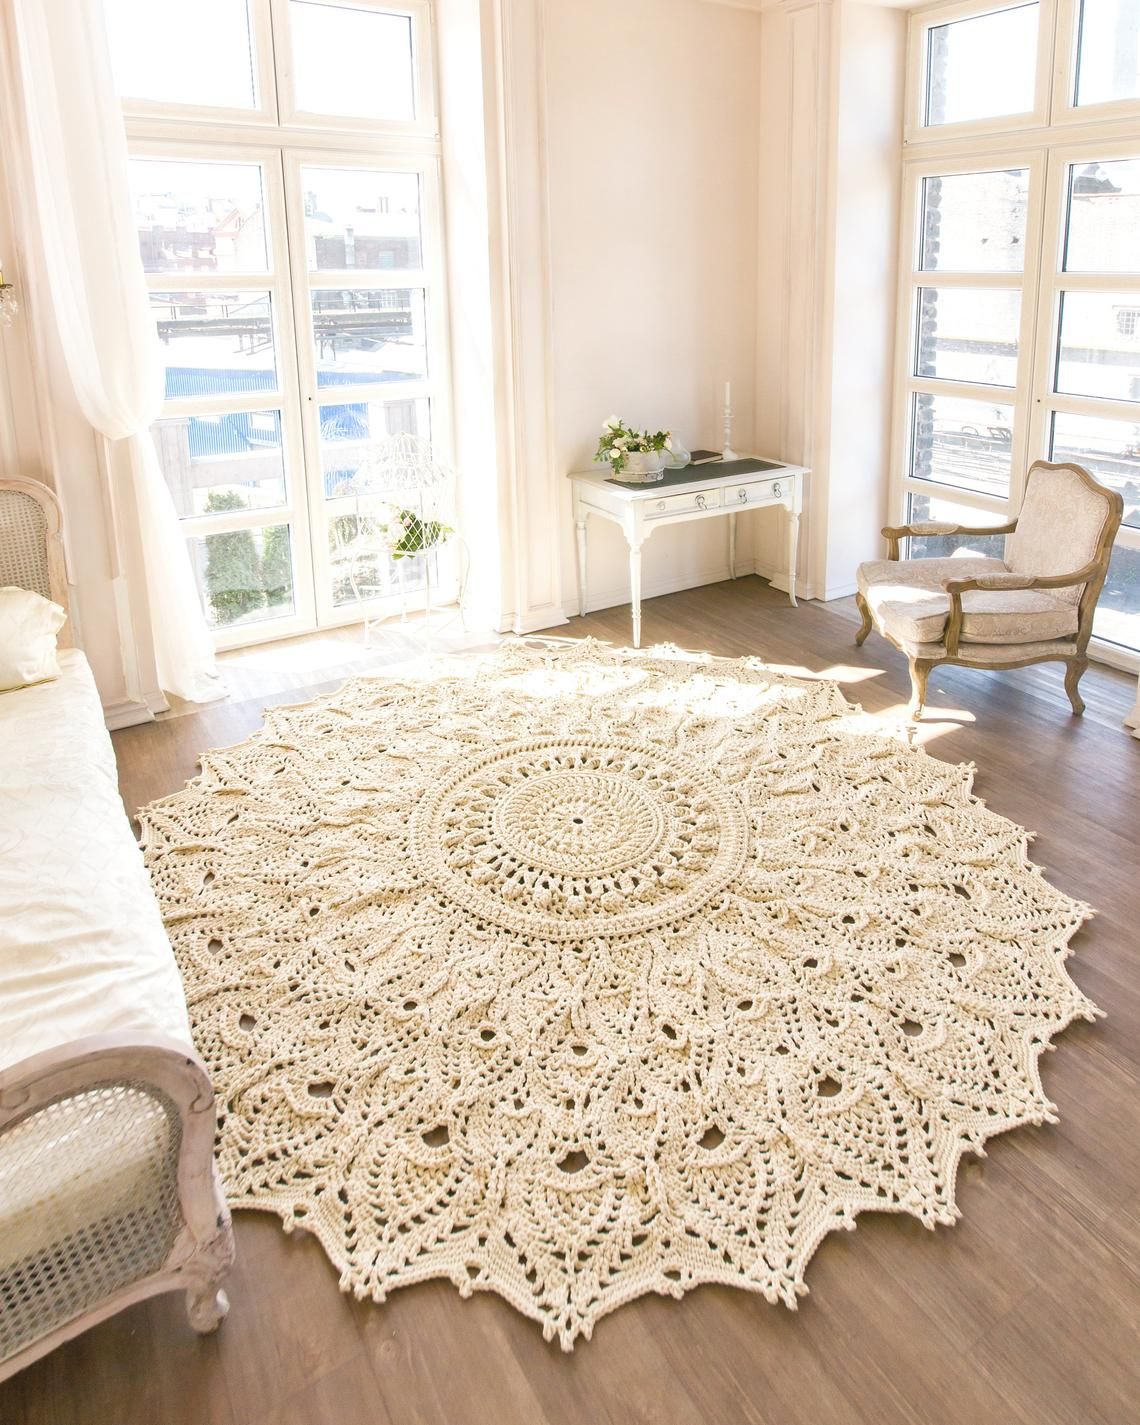 Crochet Rug in the Interior